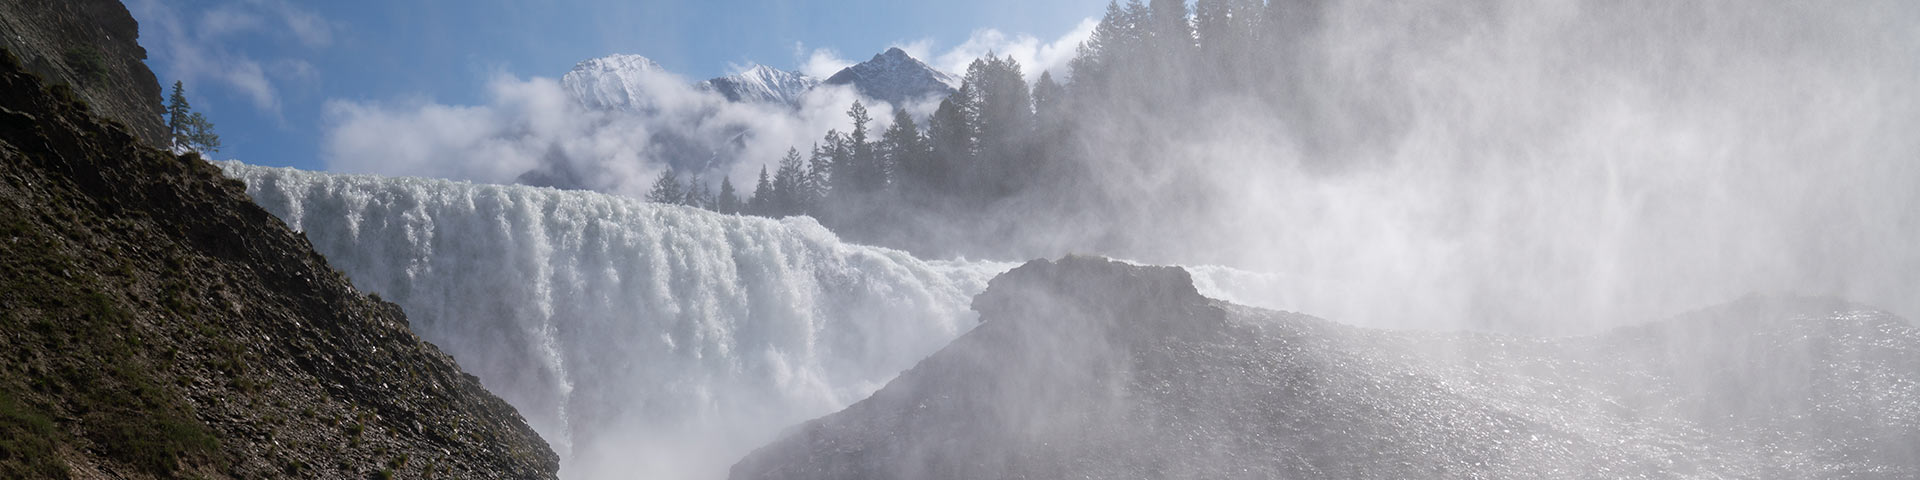 Misty photo of Wapta Falls